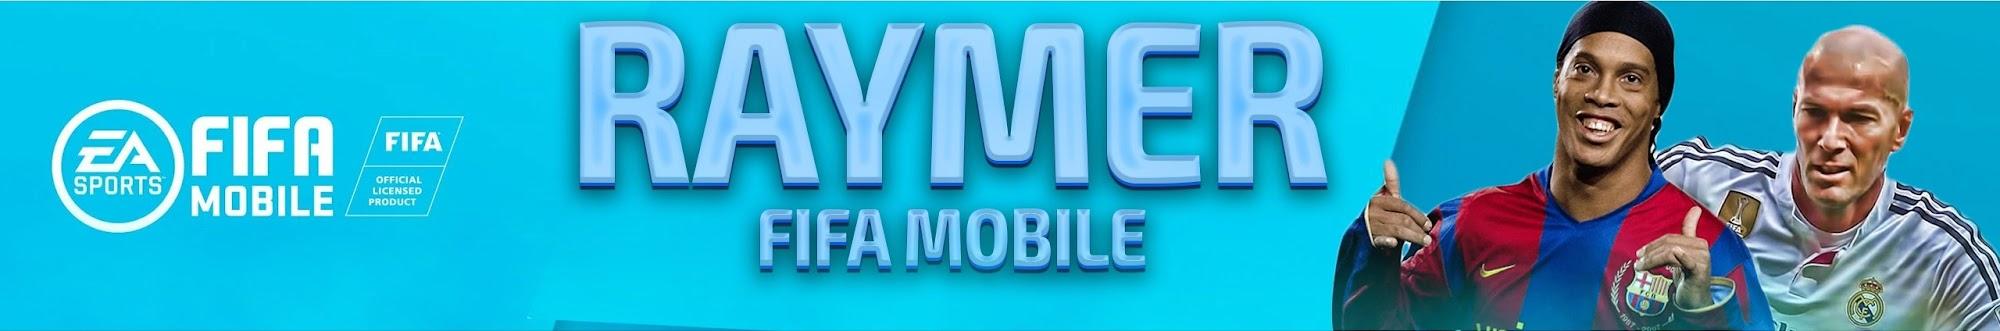 RAYMER - FIFA MOBILE